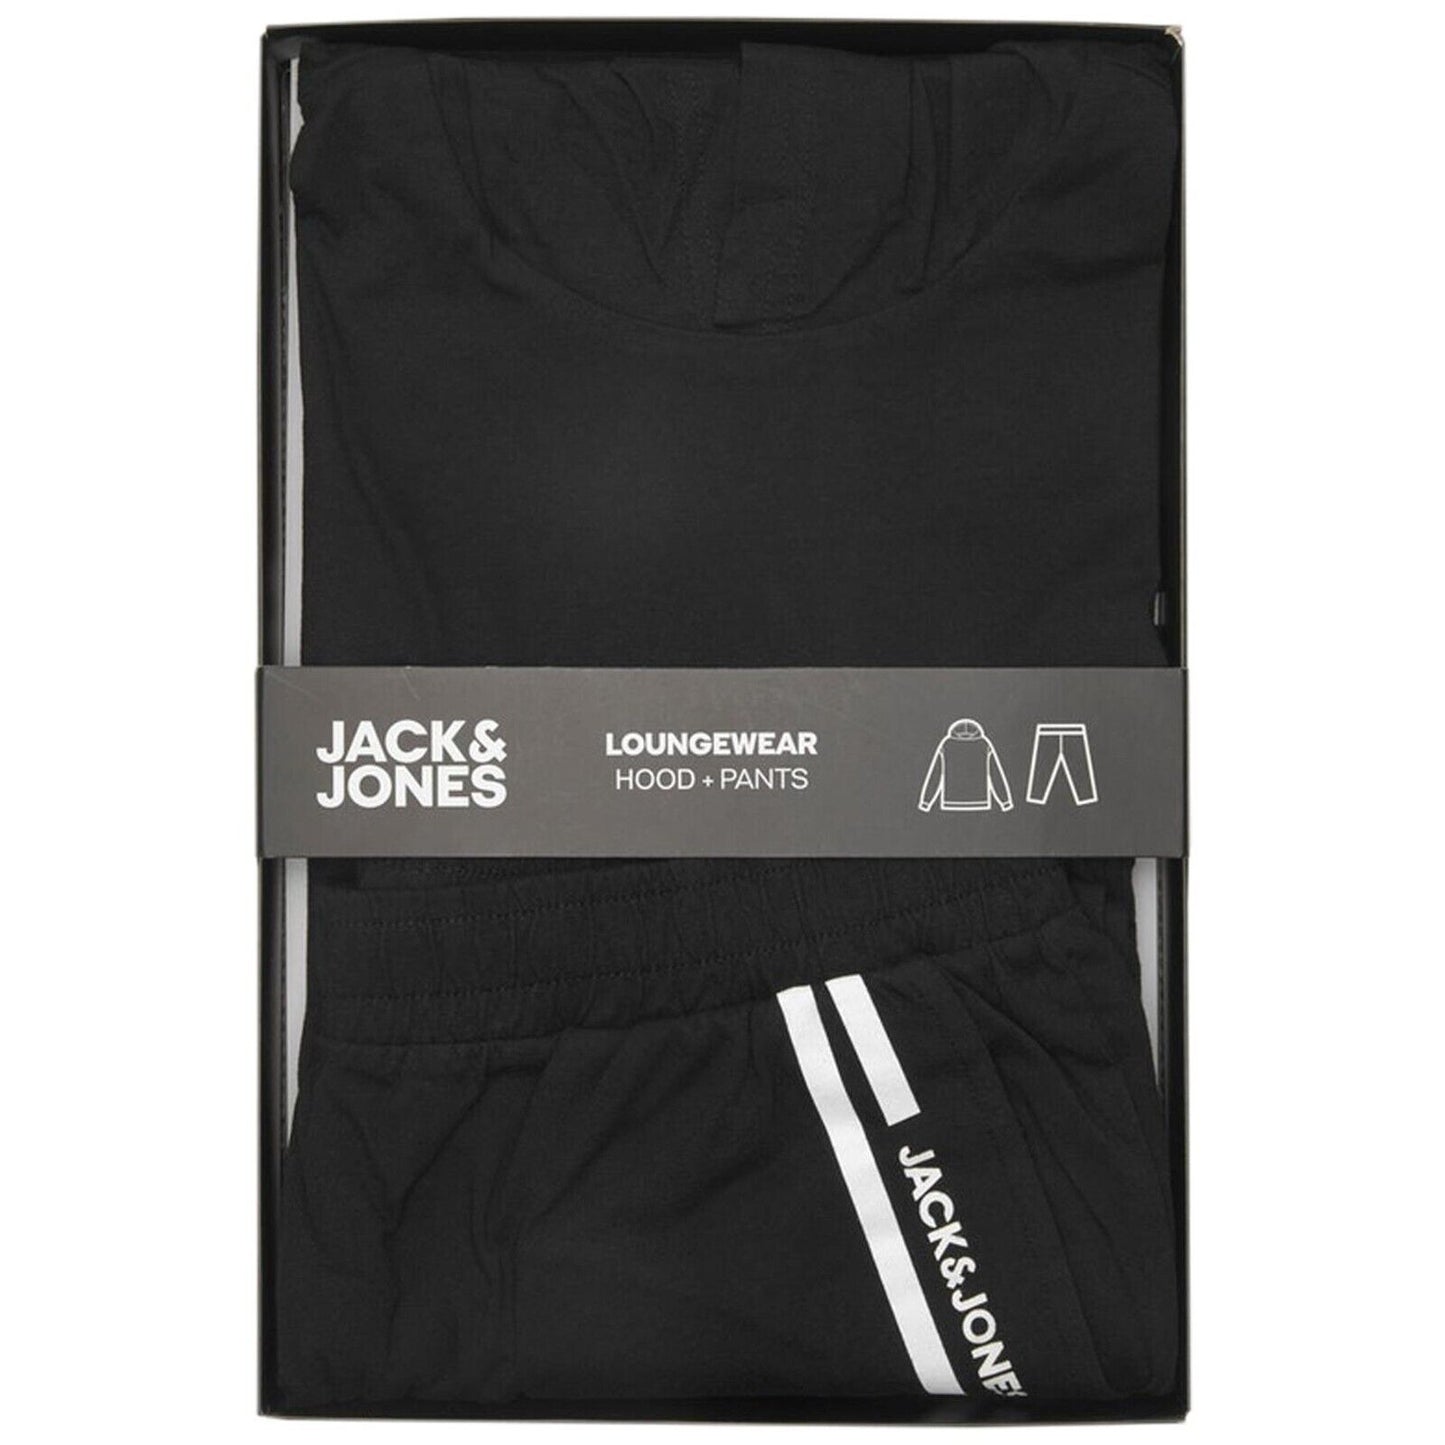 Jack & Jones Kids Tracksuit Boys Sweat Hooded Sweatshirt Pant Gift Set